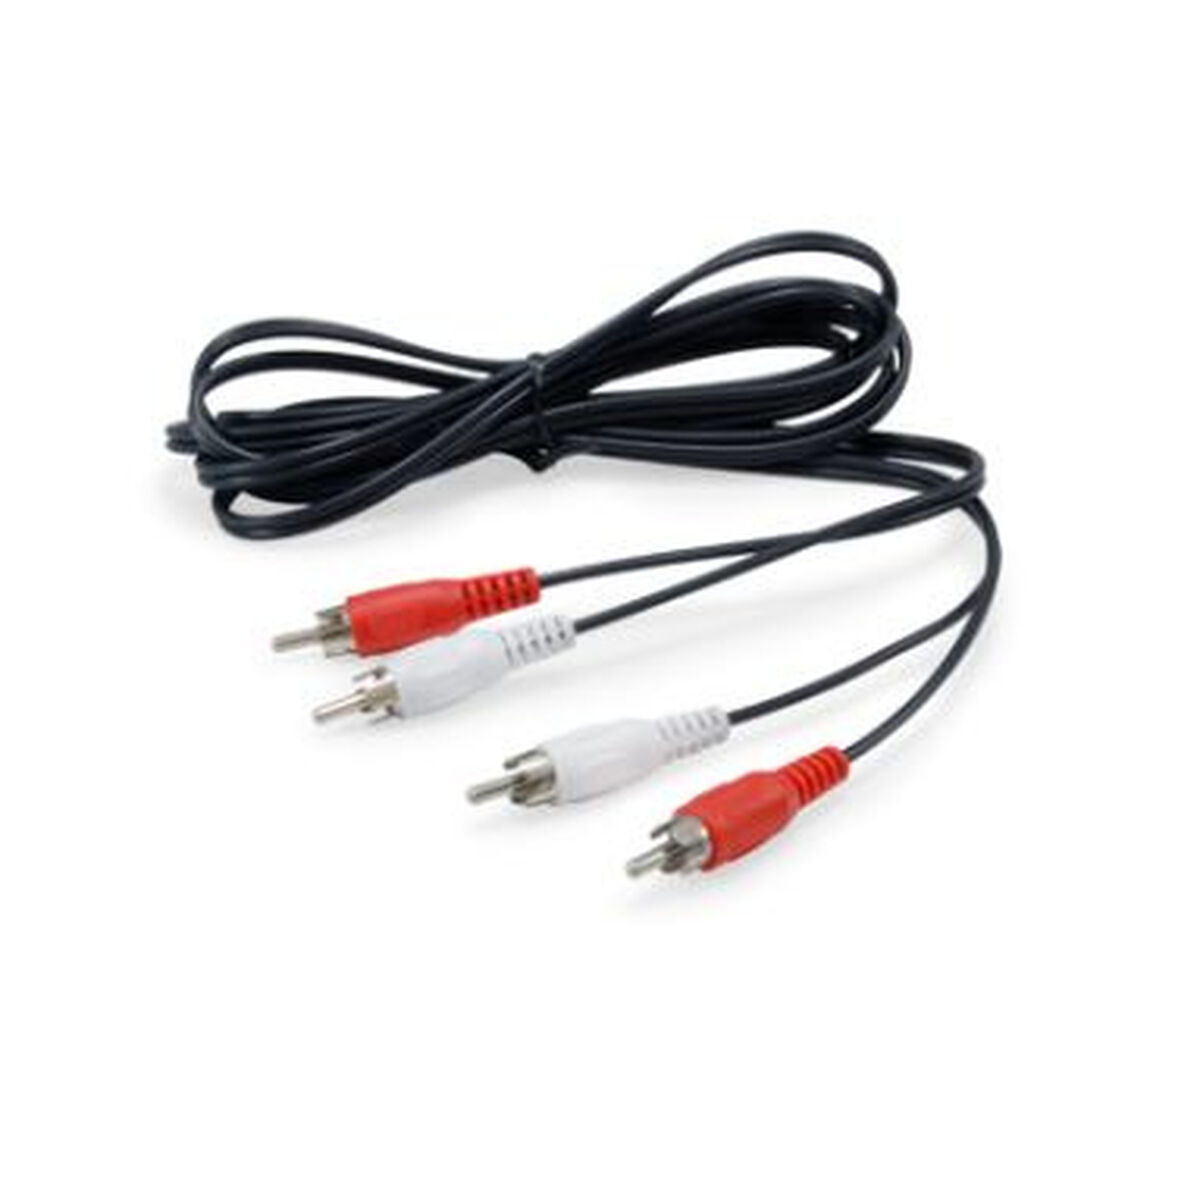 Câble audio Equip 147094